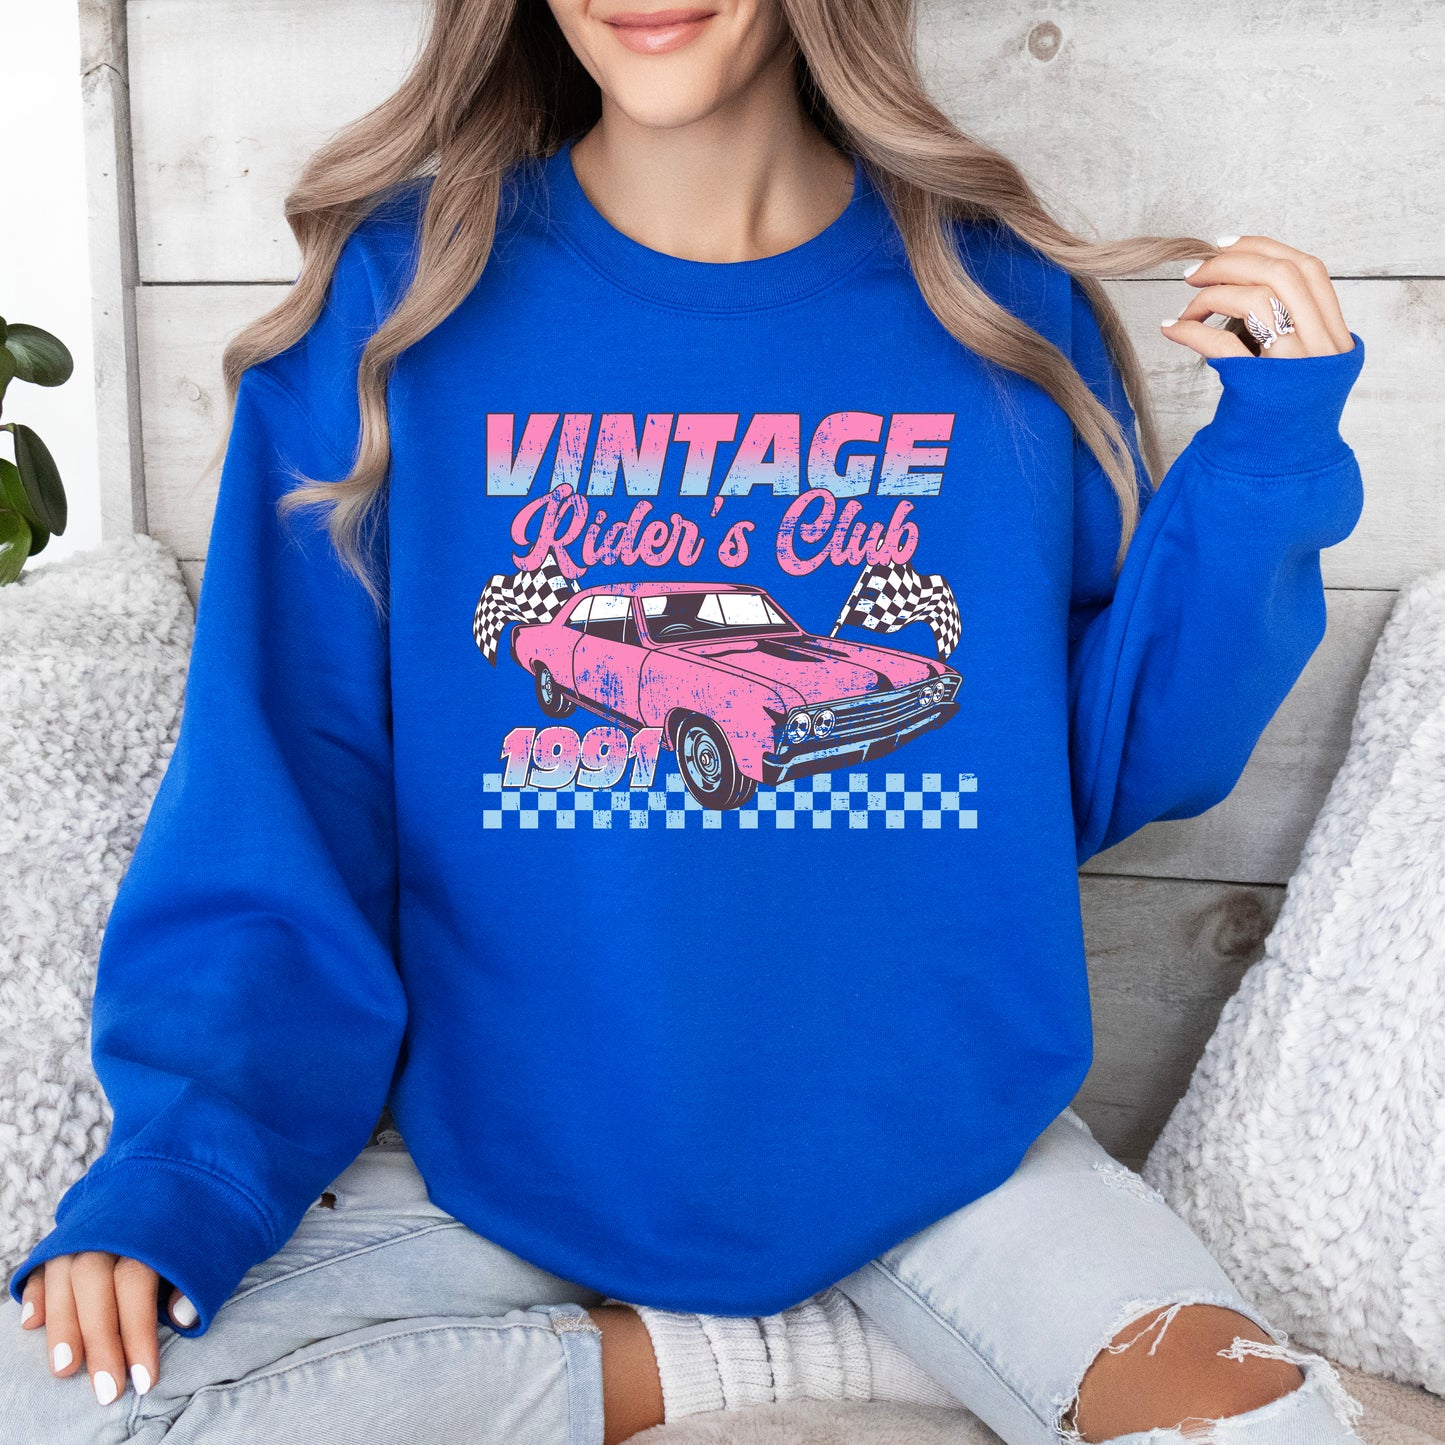 Vintage Rider's Club | Sweatshirt